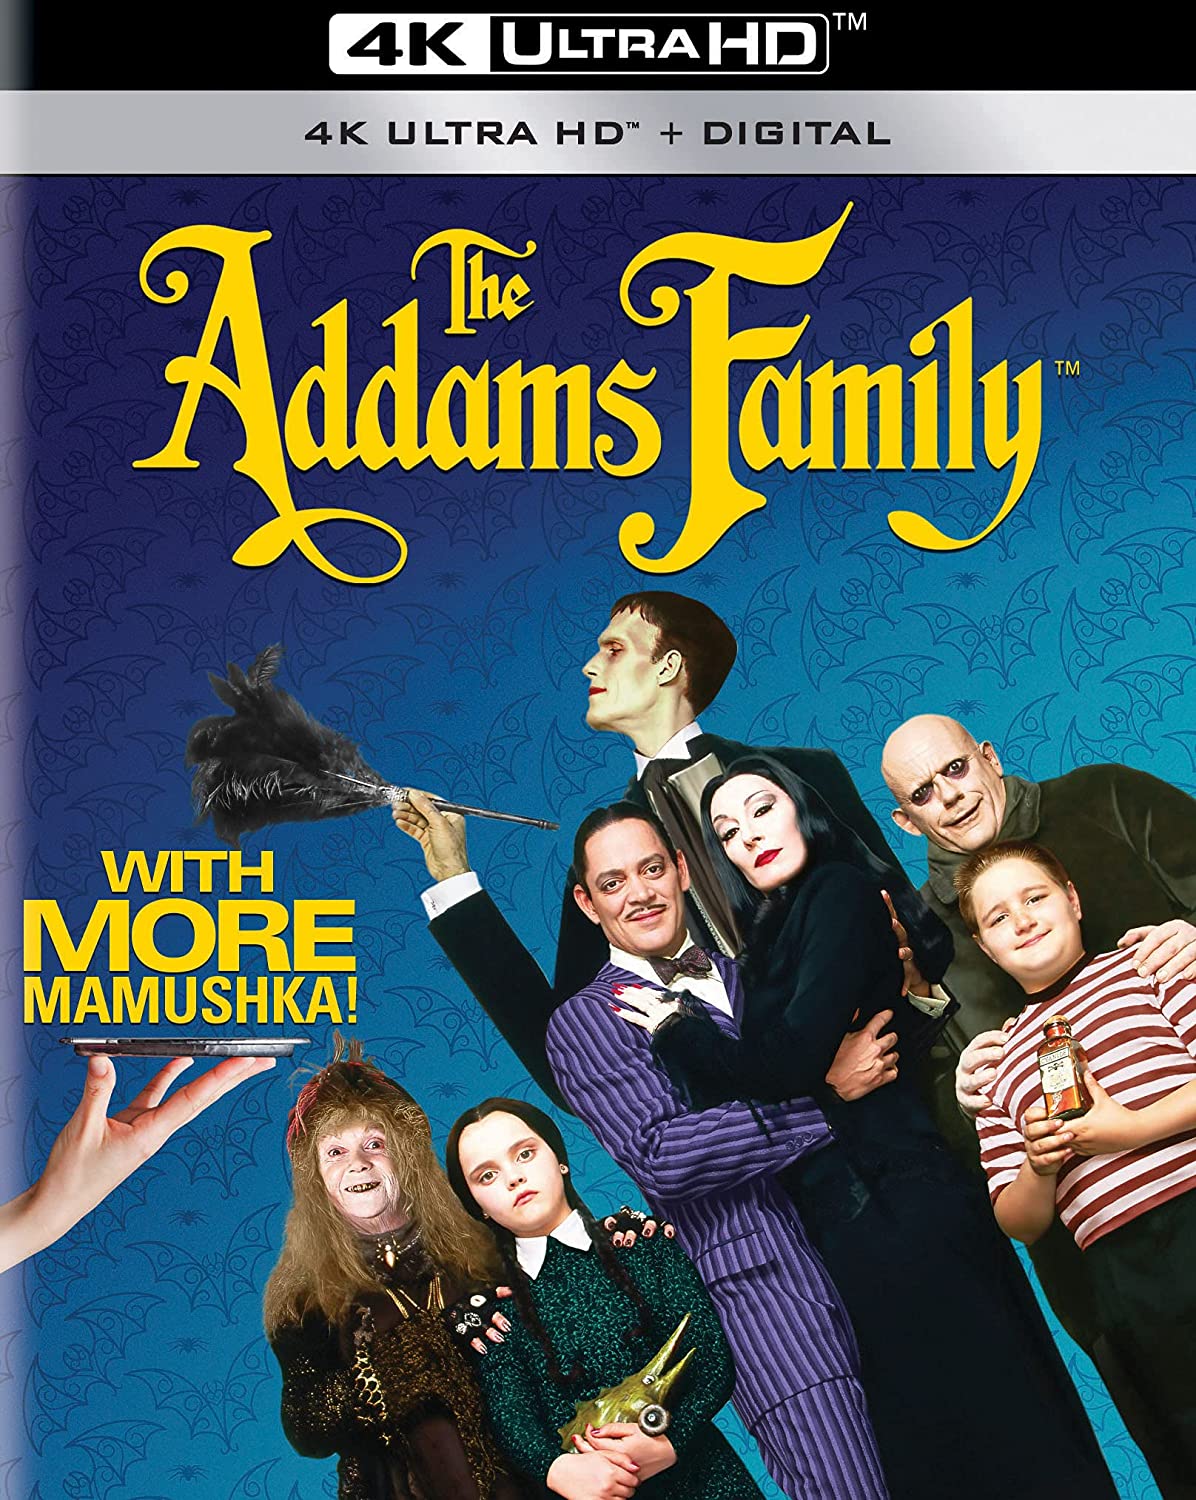 The Addams Family 1991 4k Blu-ray